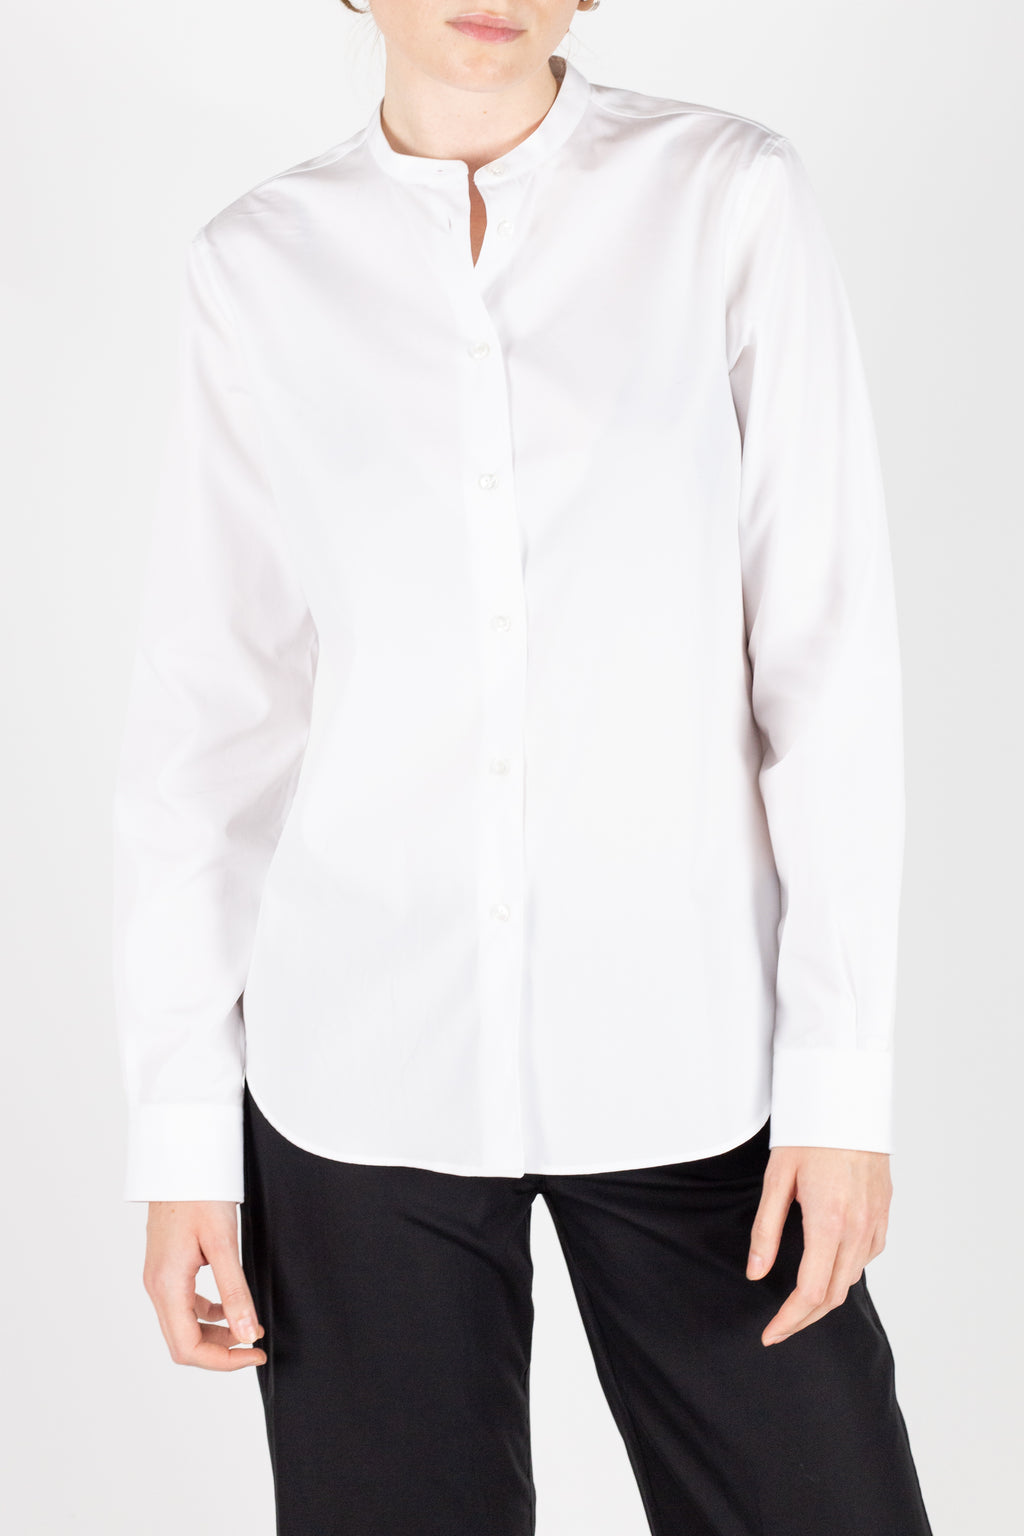 Women's white cotton poplin shirt. Long sleeve.